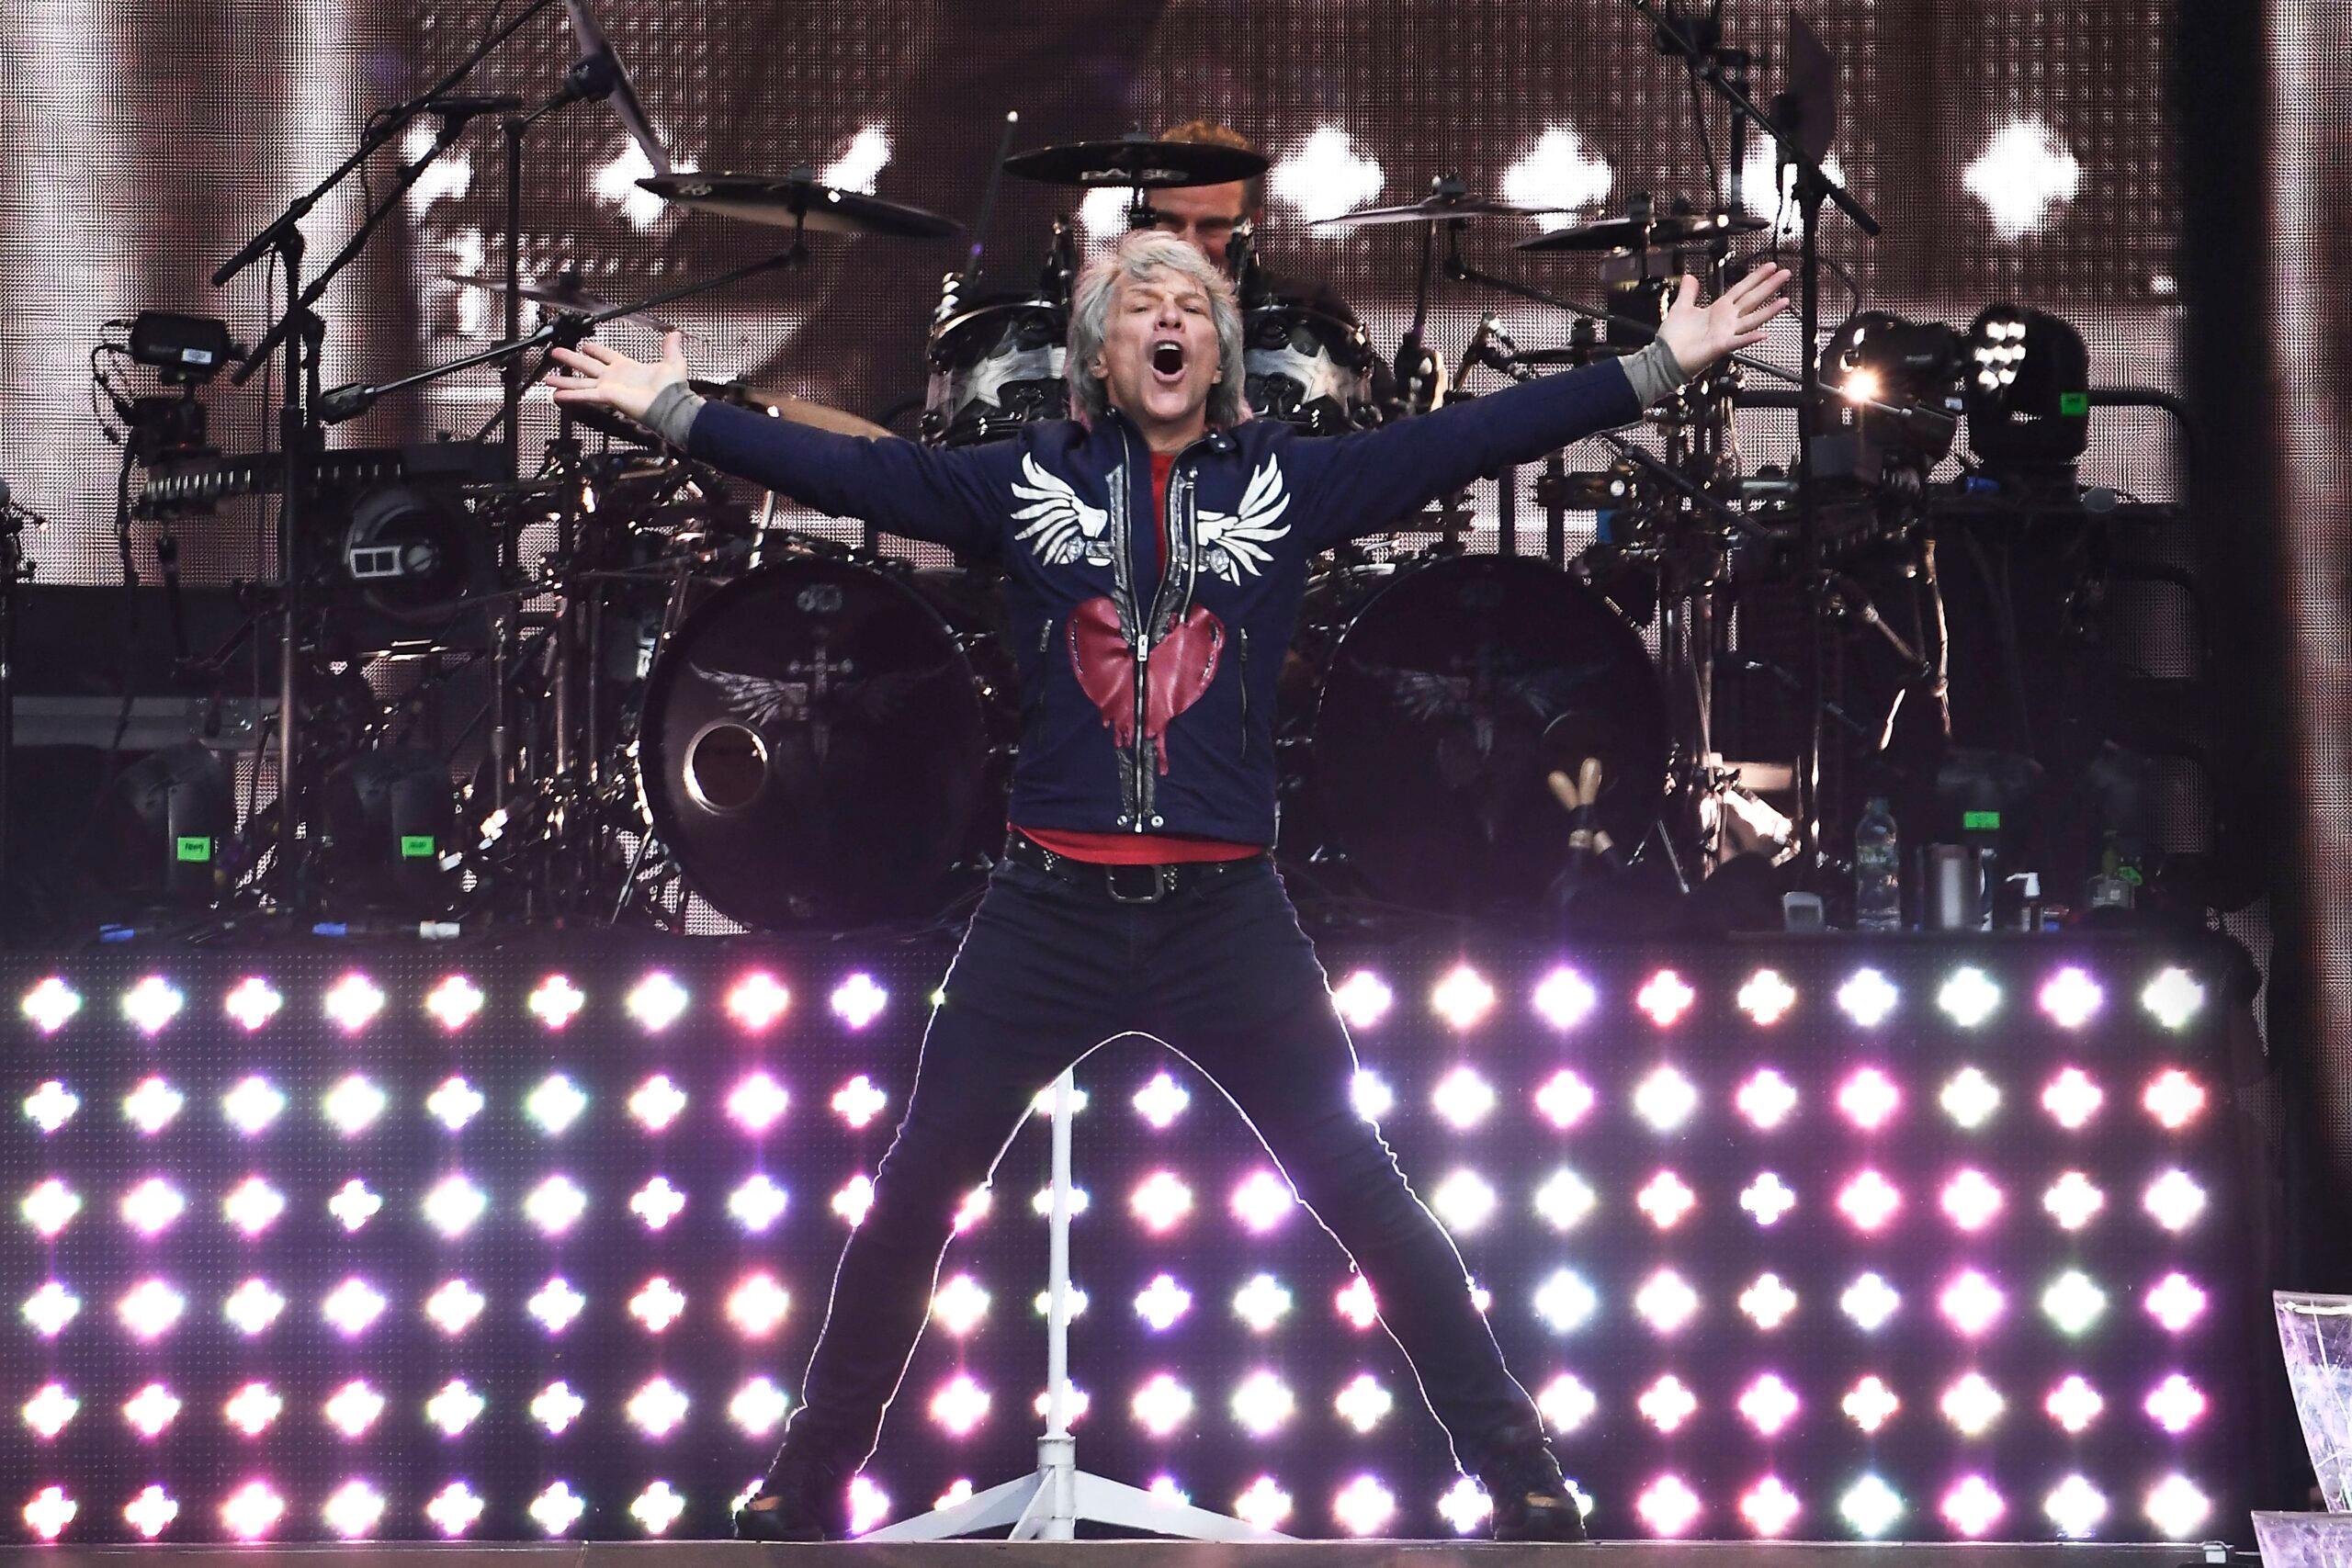 Jon Bon Jovi 'Unsure' Of Future Concerts: 'Still Recovering from a Major Surgery'